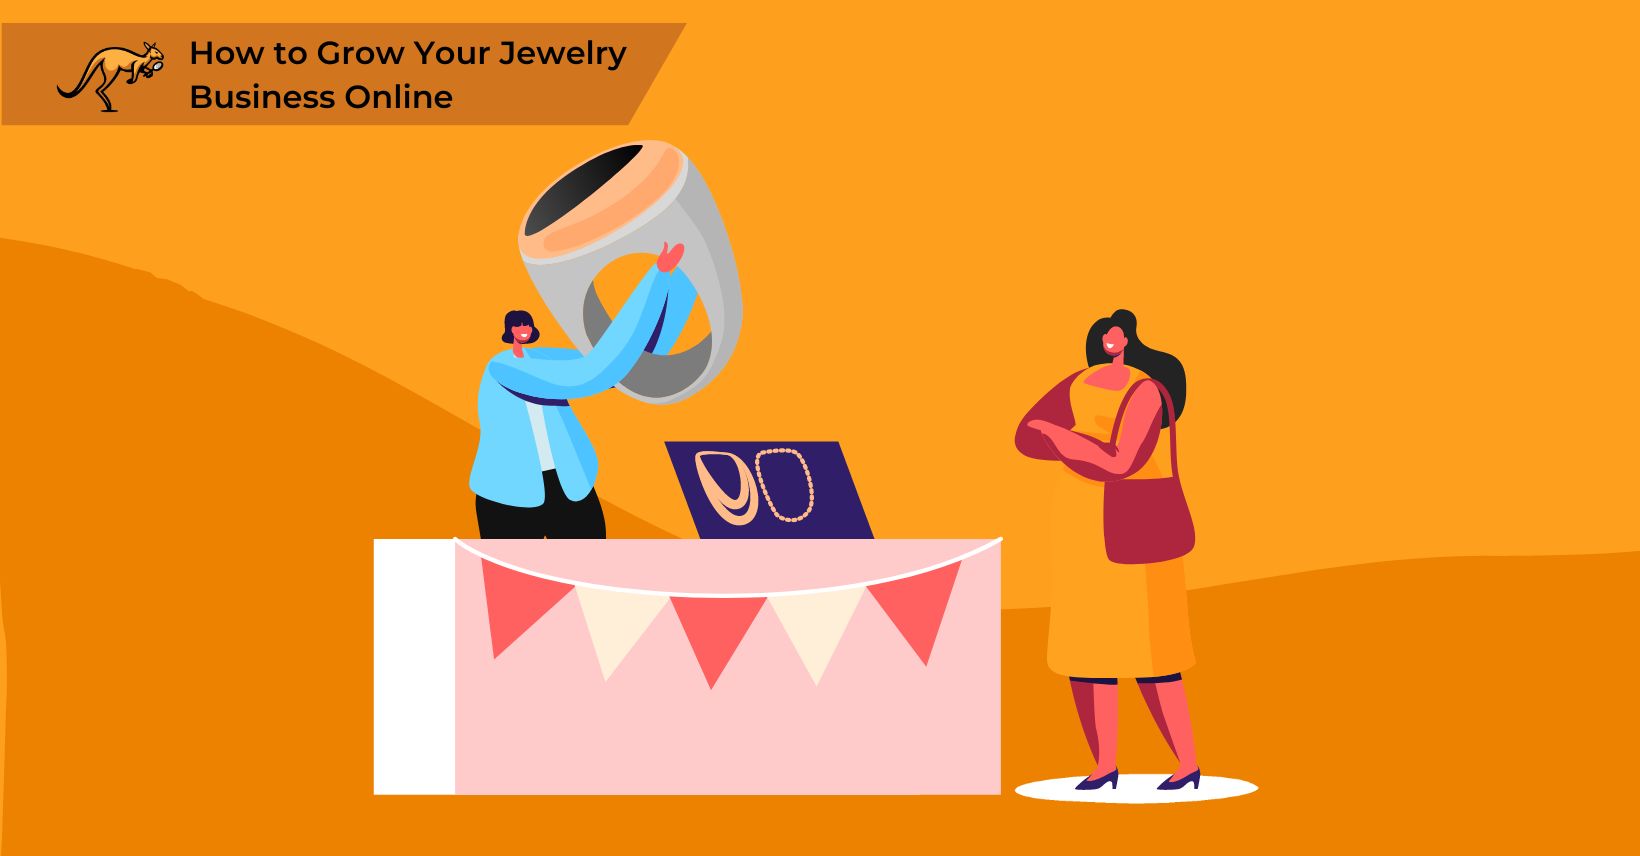 strategies-for-growing-jewelry-business-online-1640x856.jpg